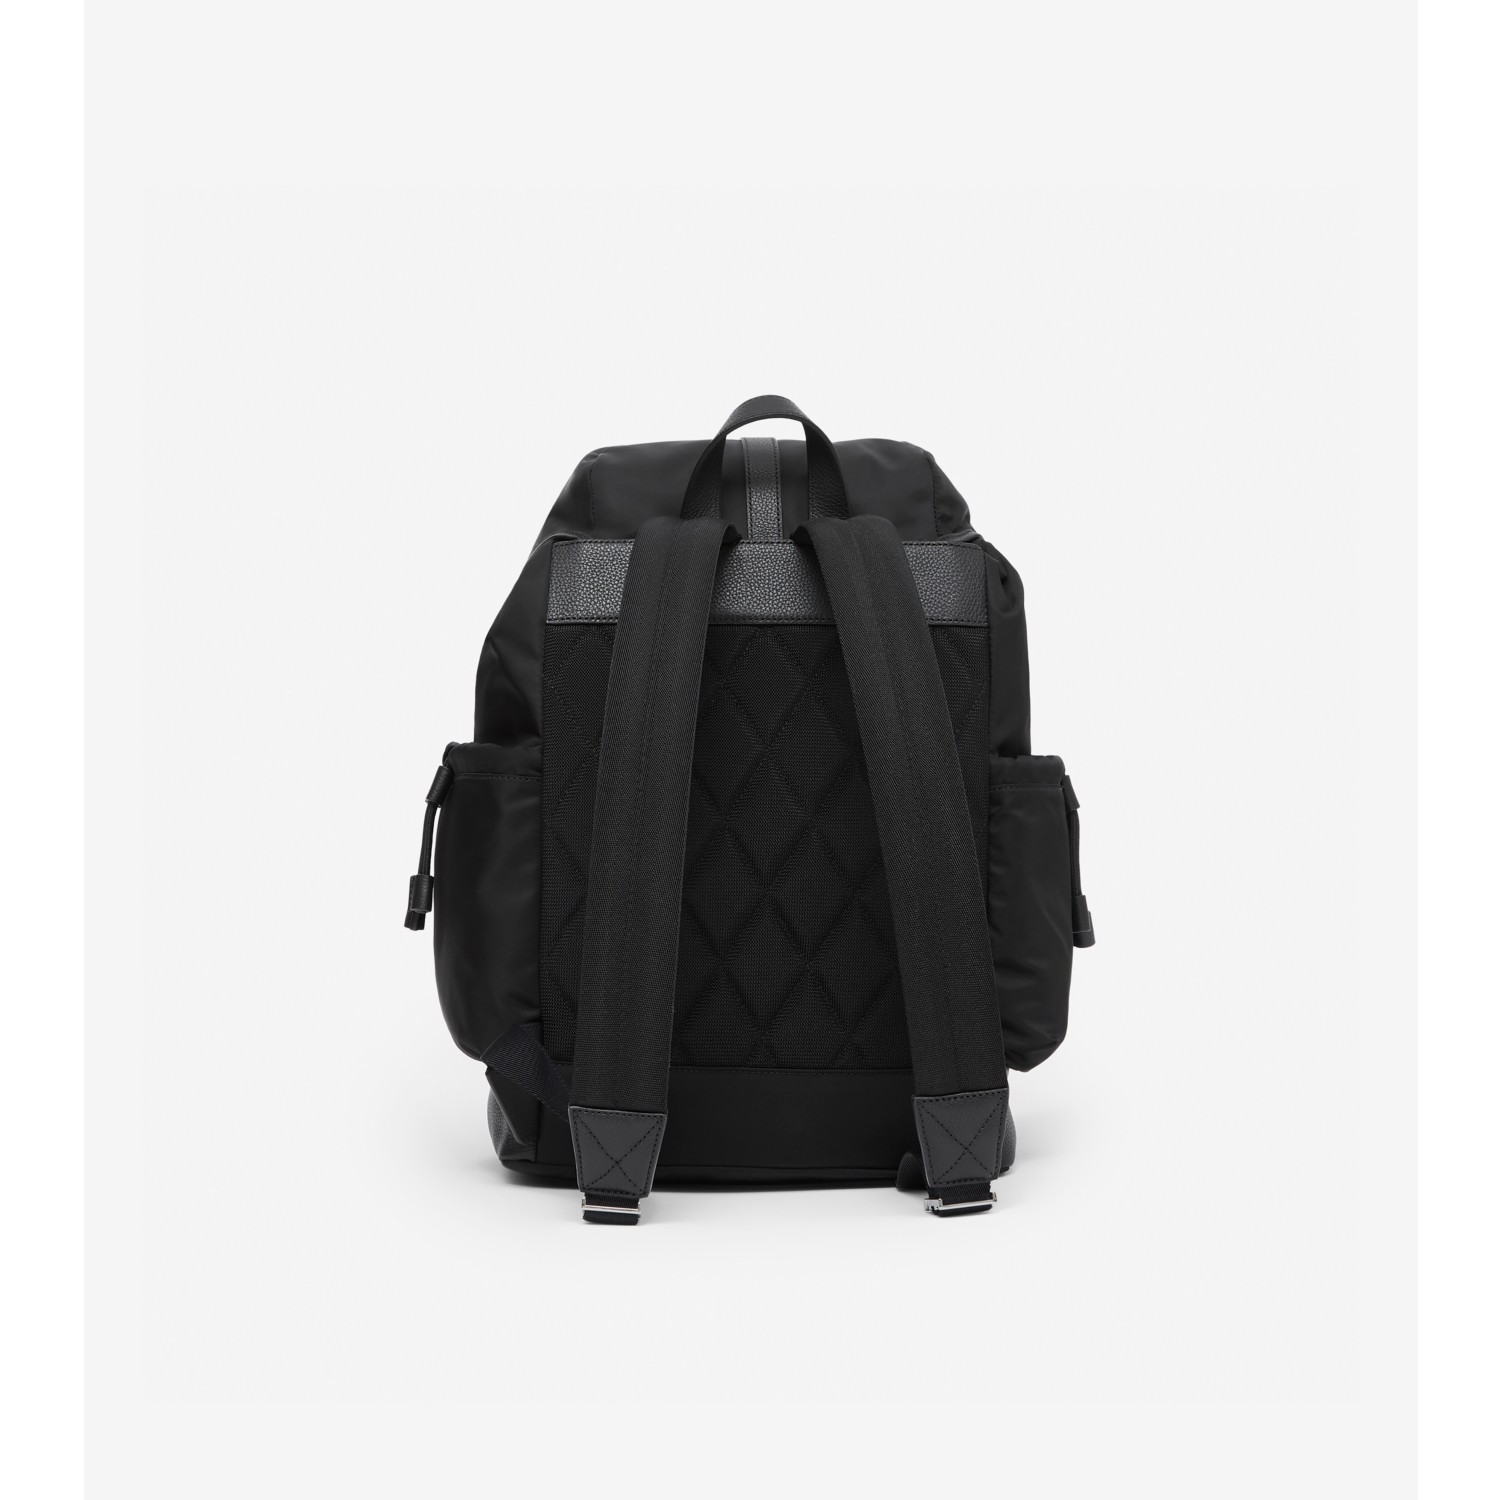 Puffer Crossbody Backpack, Diaper Bag or Purse in Black